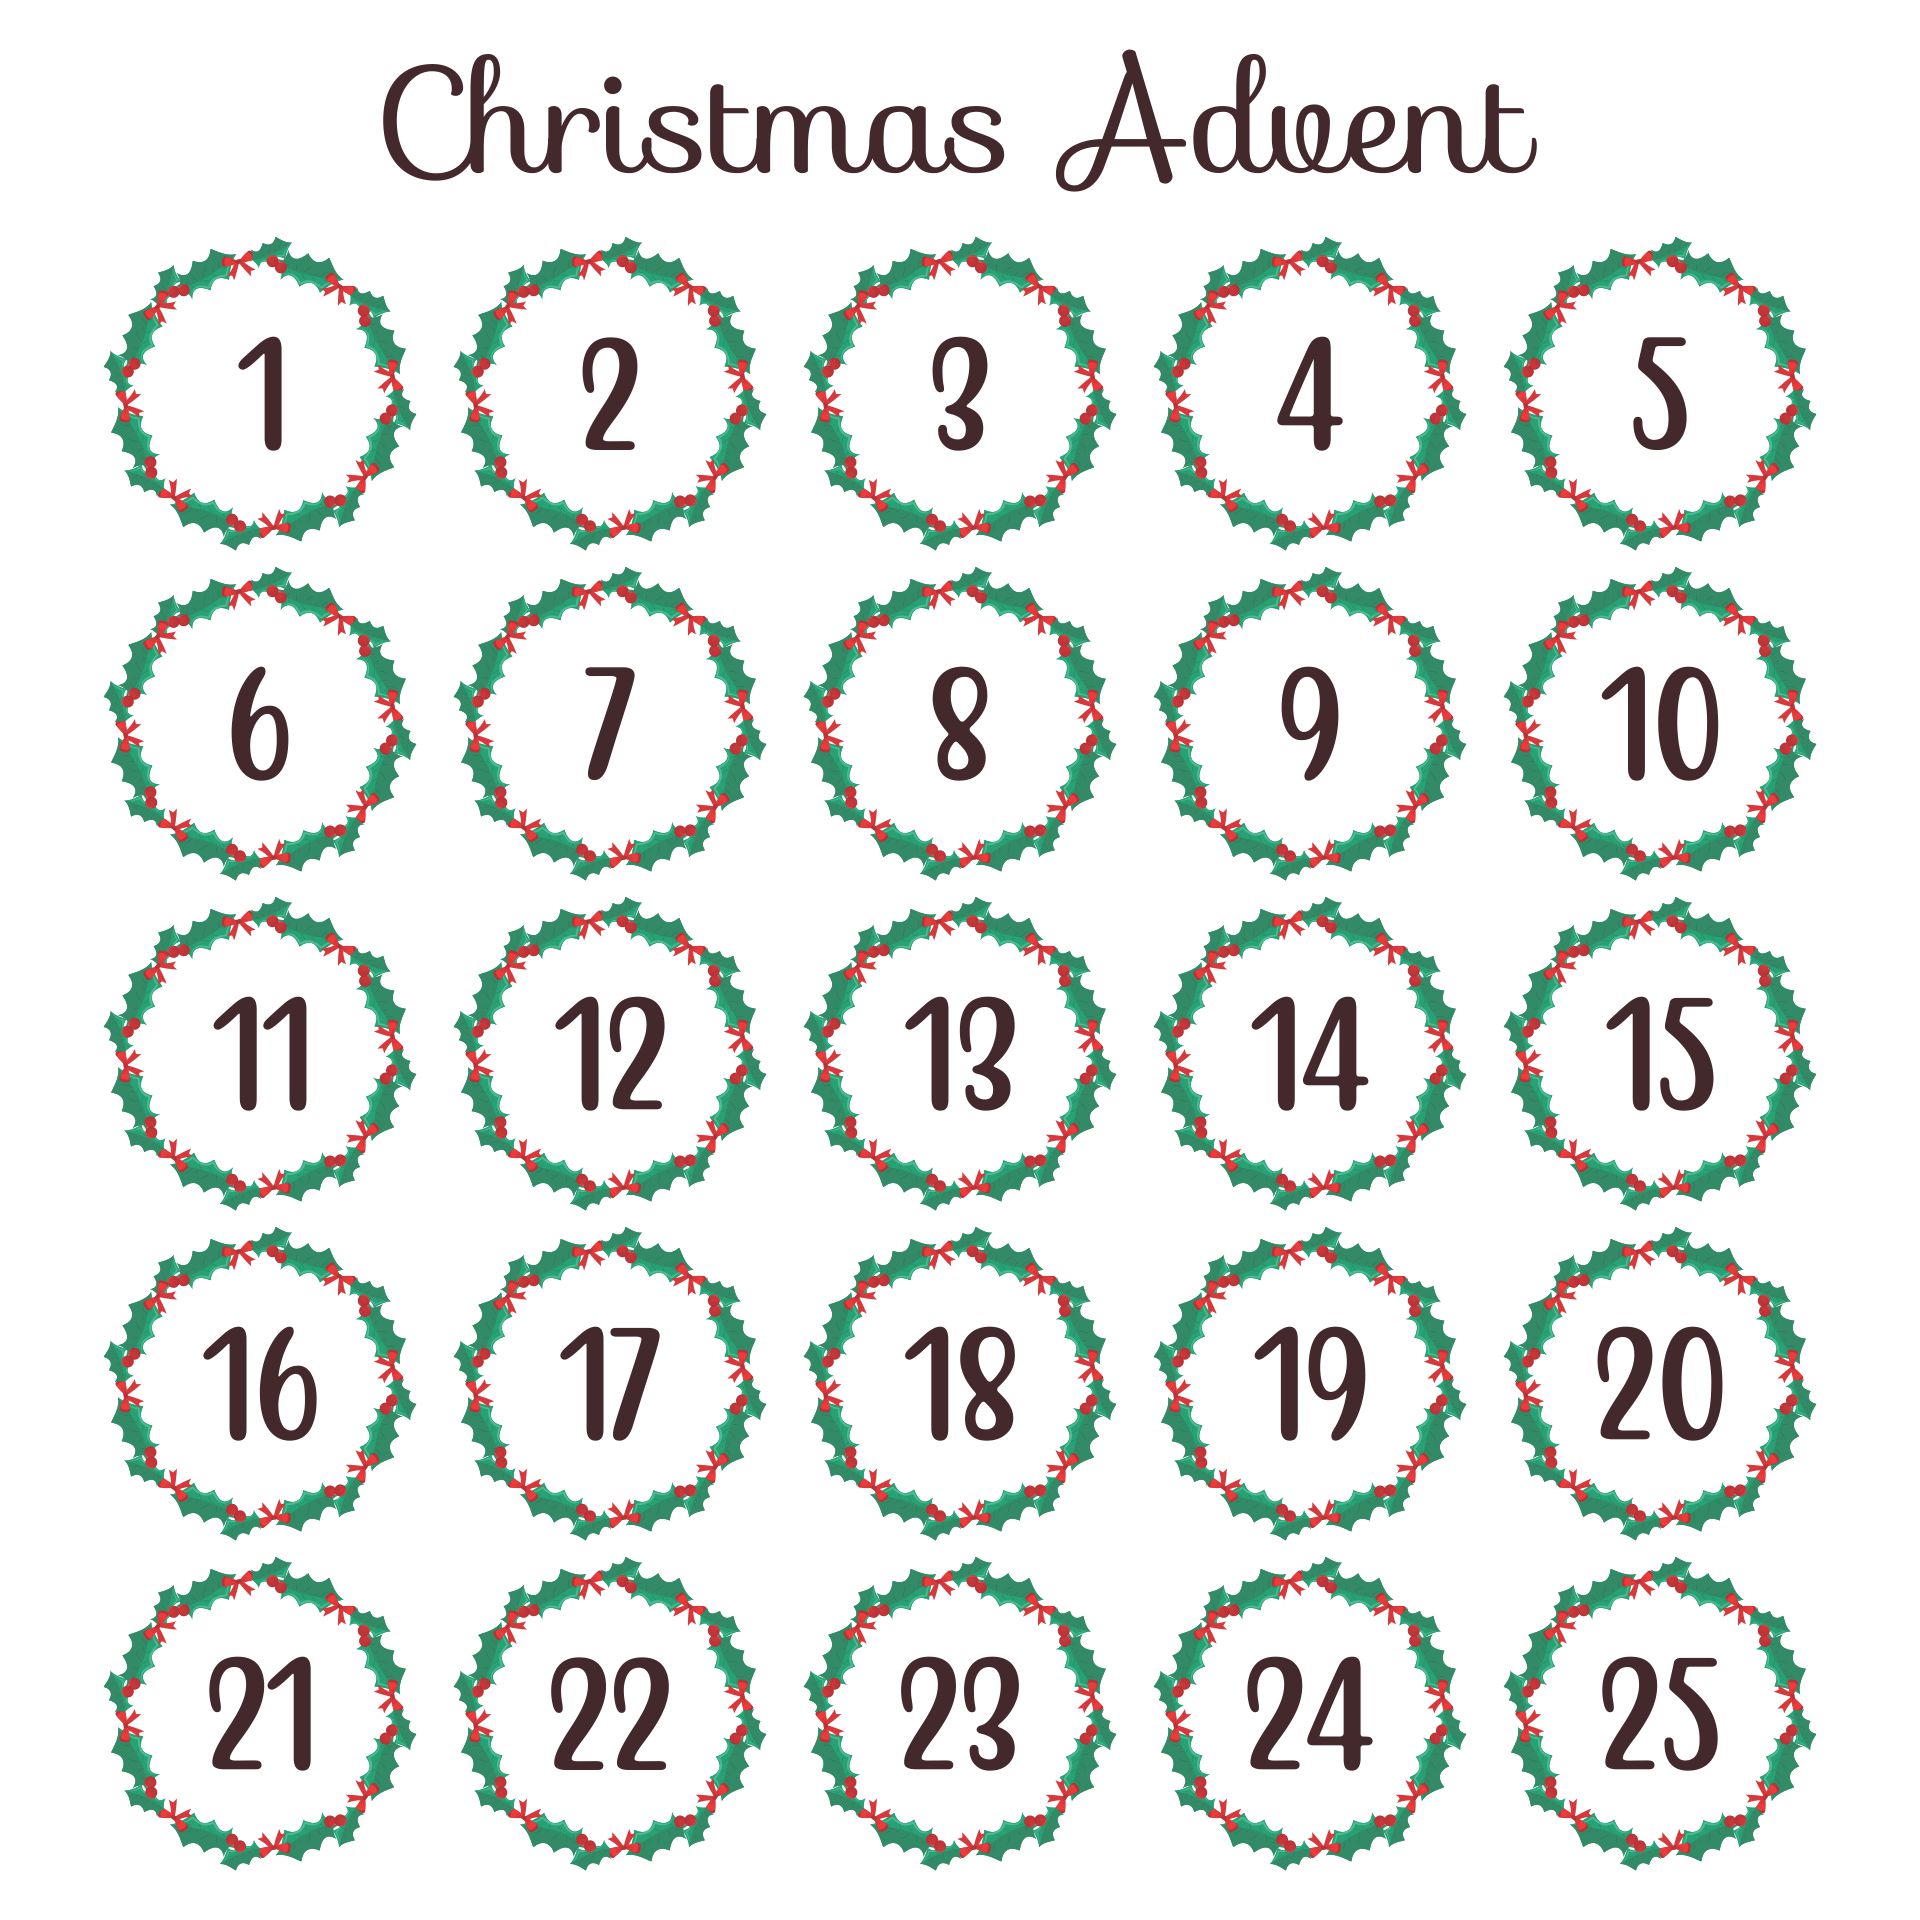 Merry Christmas Advent Calendar Design Printable